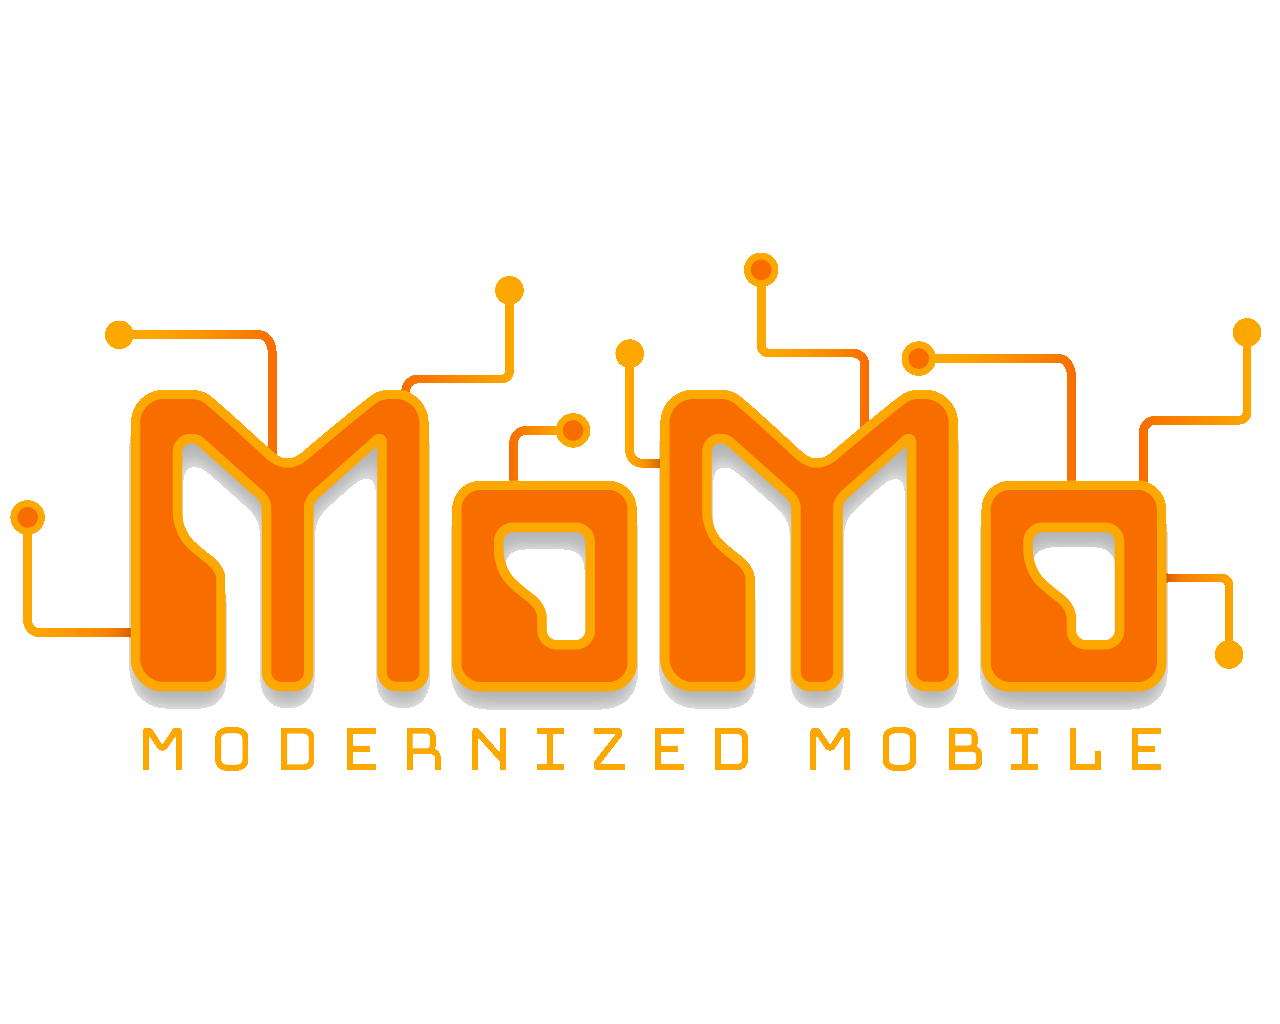 Modernized Mobile LLC profile on Qualified.One